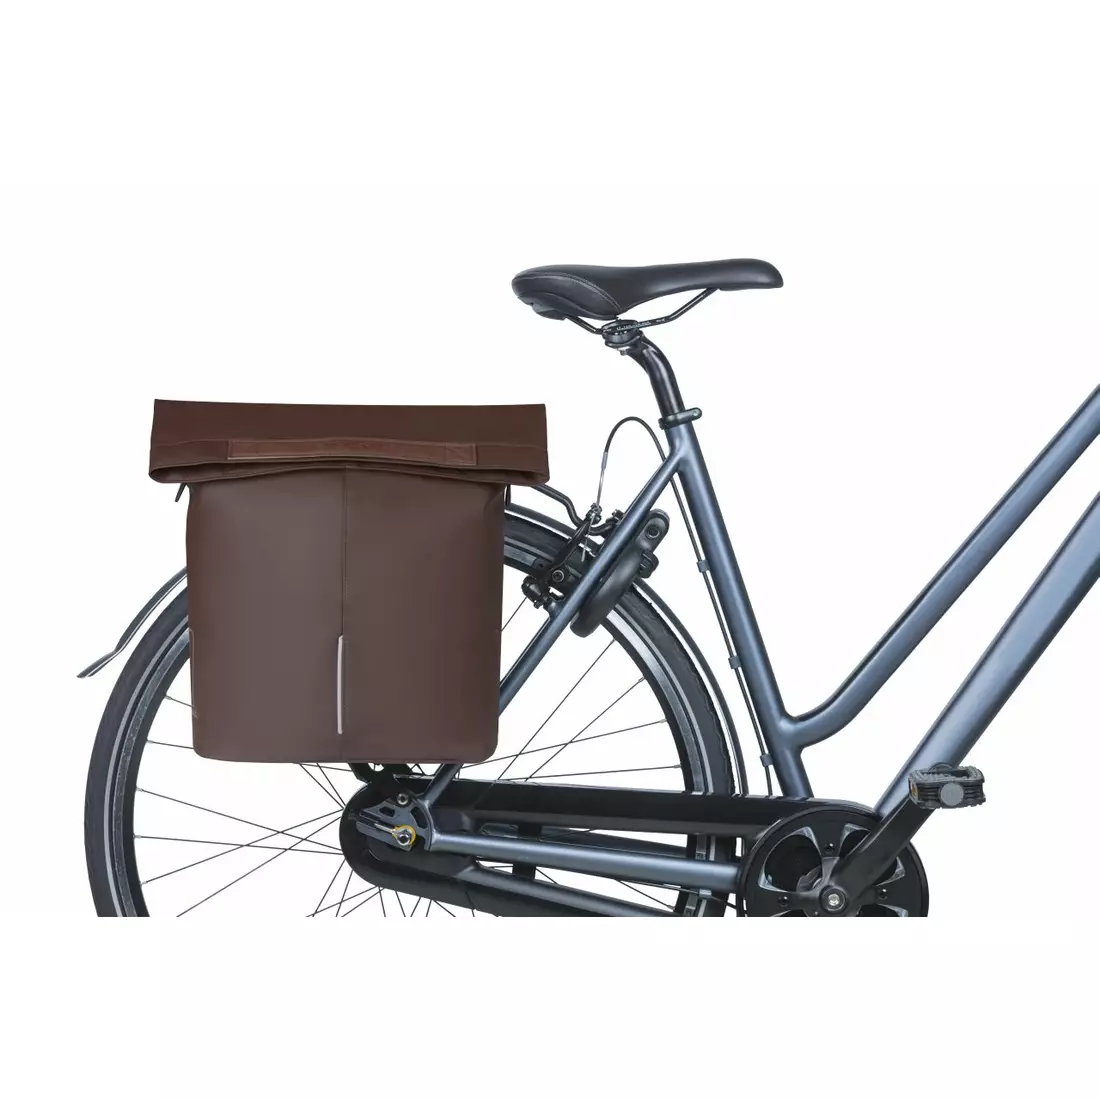 BASIL CITY SHOPPER VEGAN LEATHER bicycle rear pannier 14 L, brown